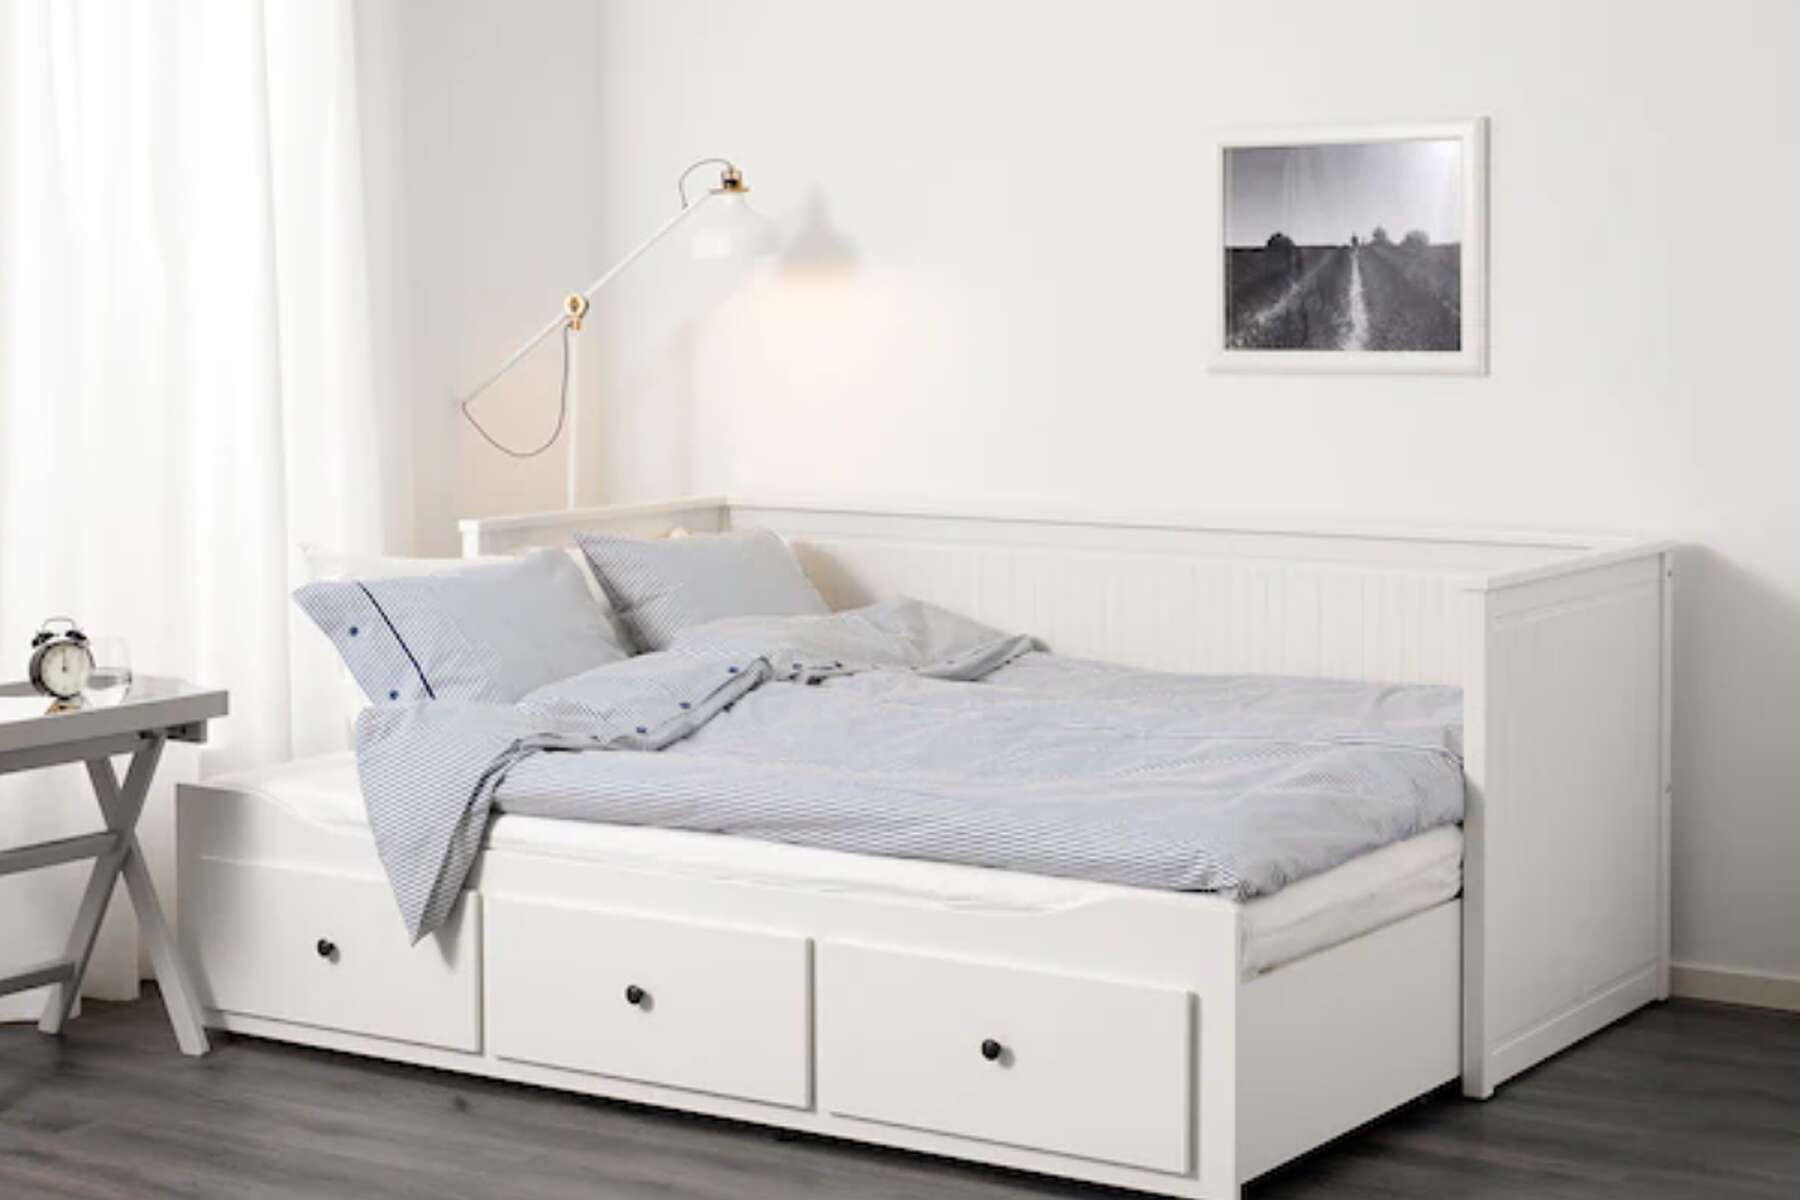 Ikea Houston Best Bedroom Furniture, Ikea King Size Bed Set